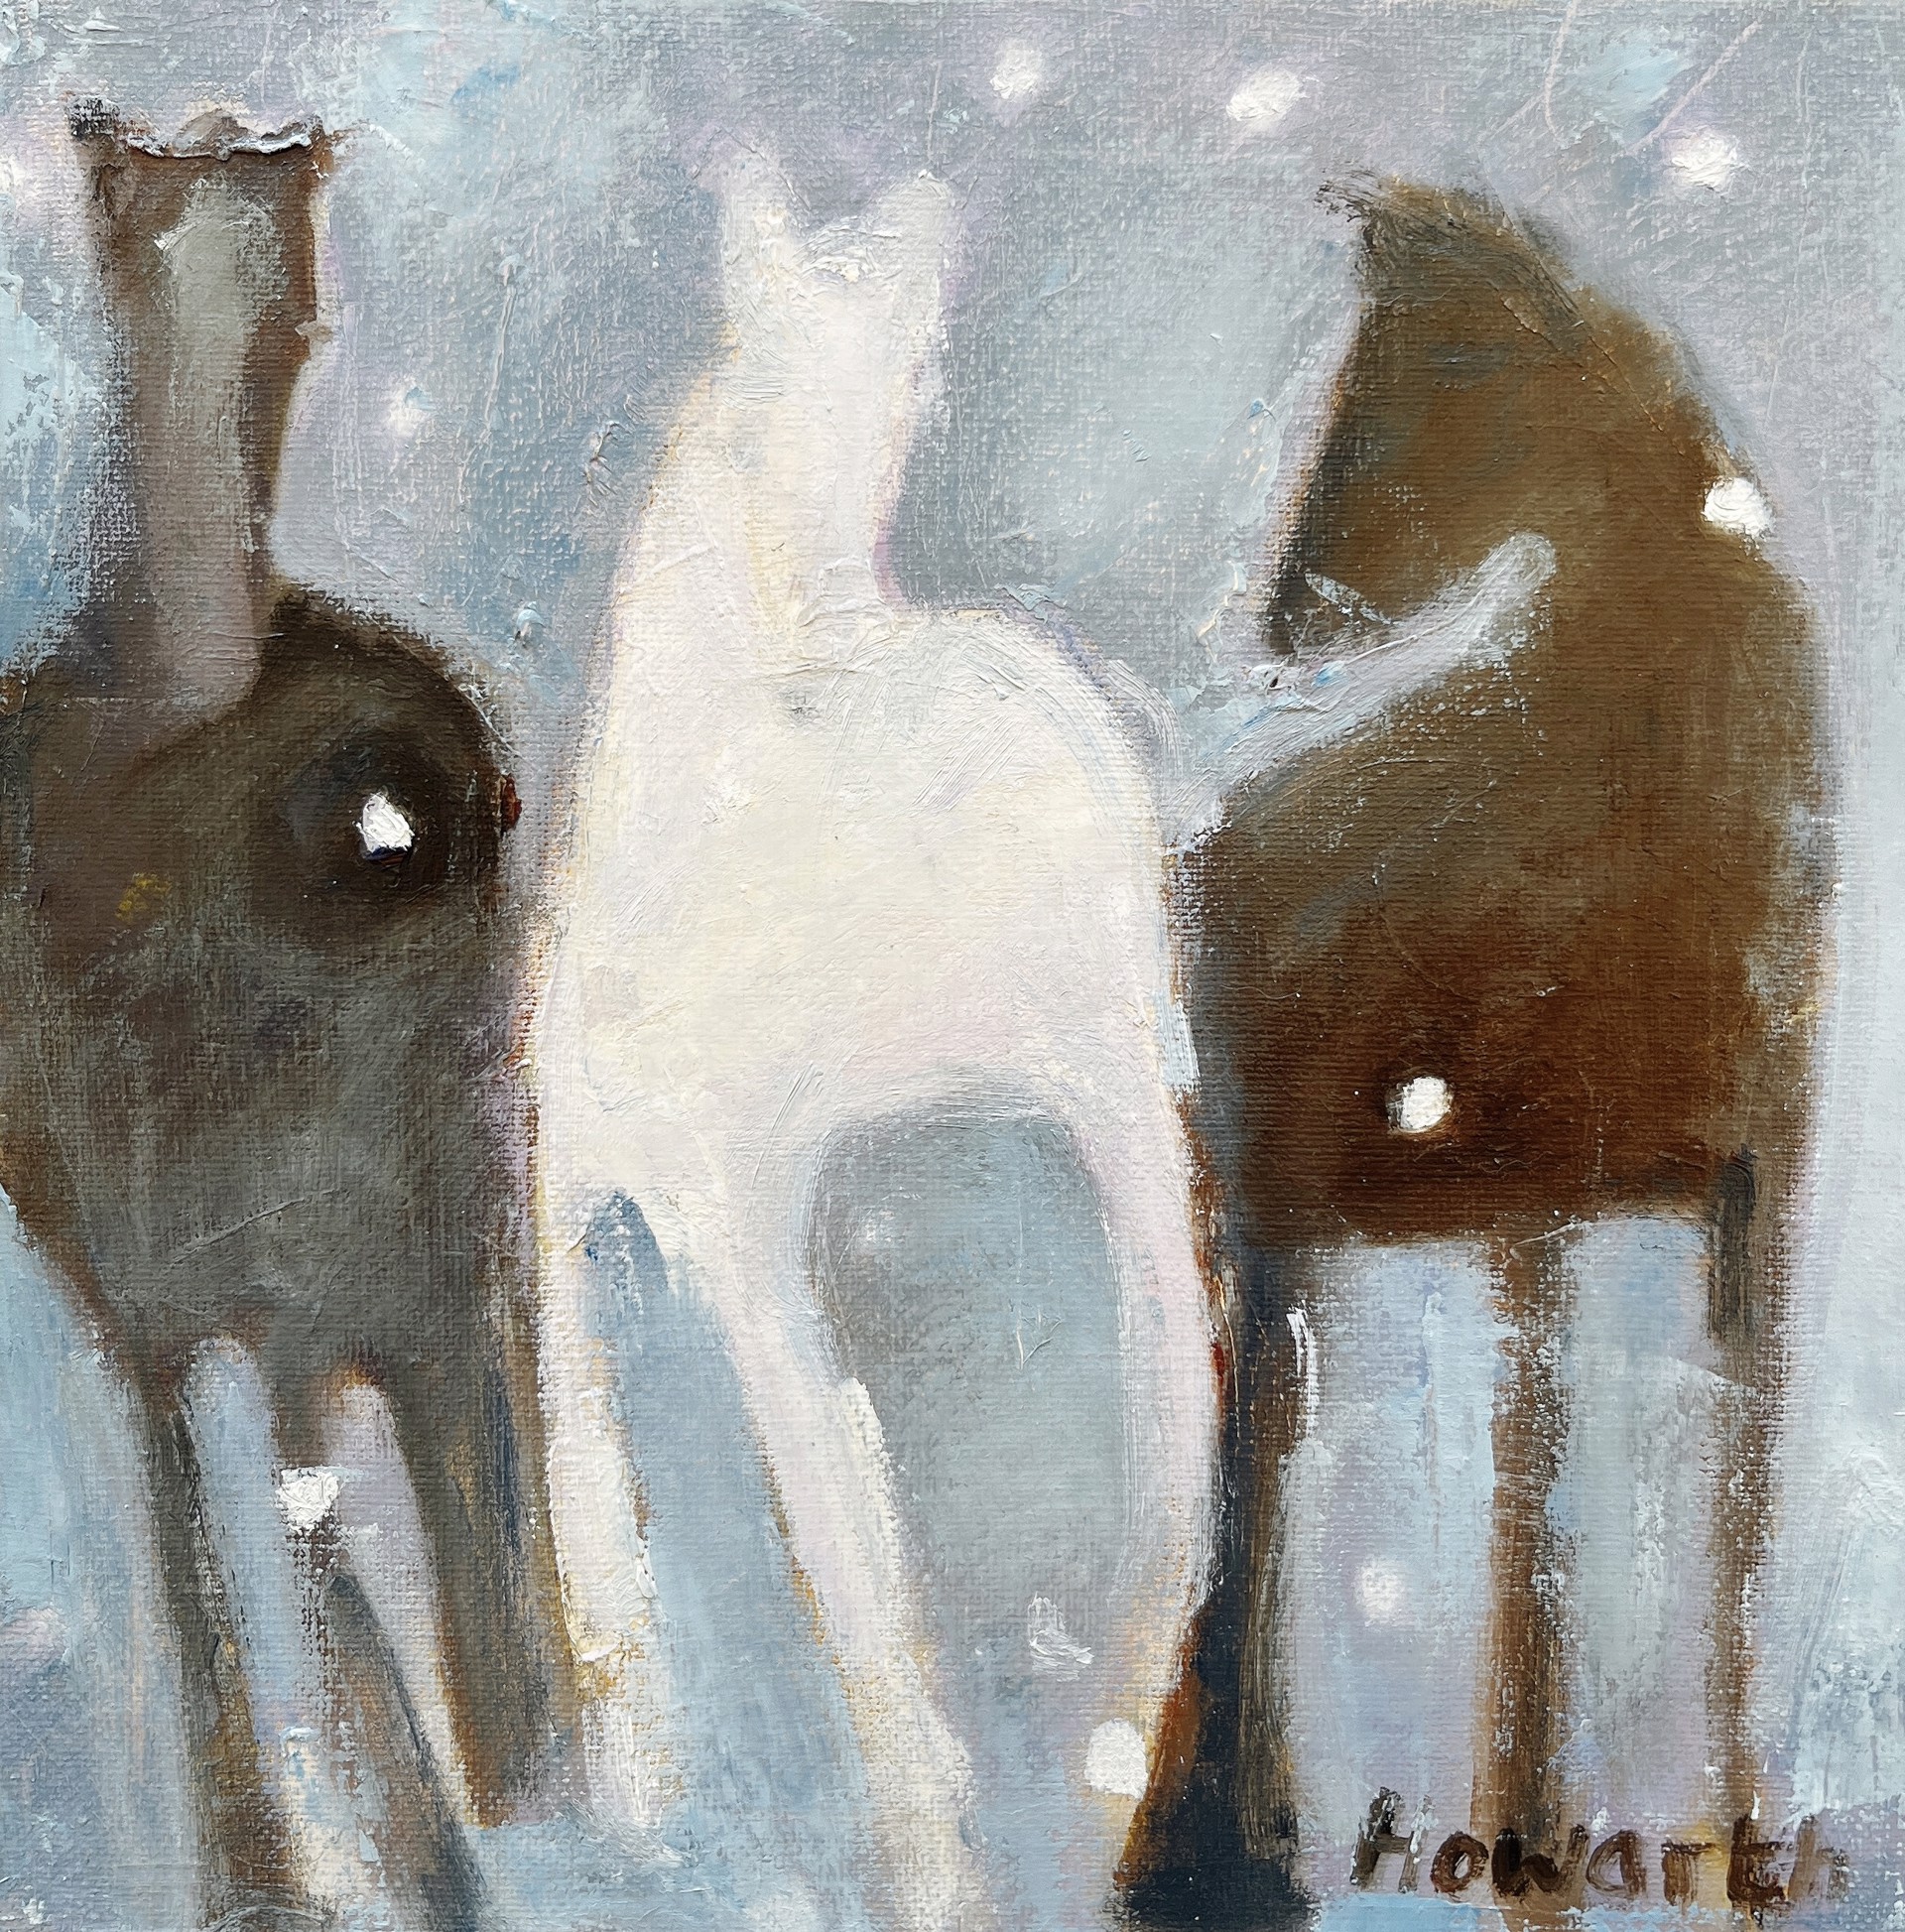 Snowflakes by Katrina Howarth